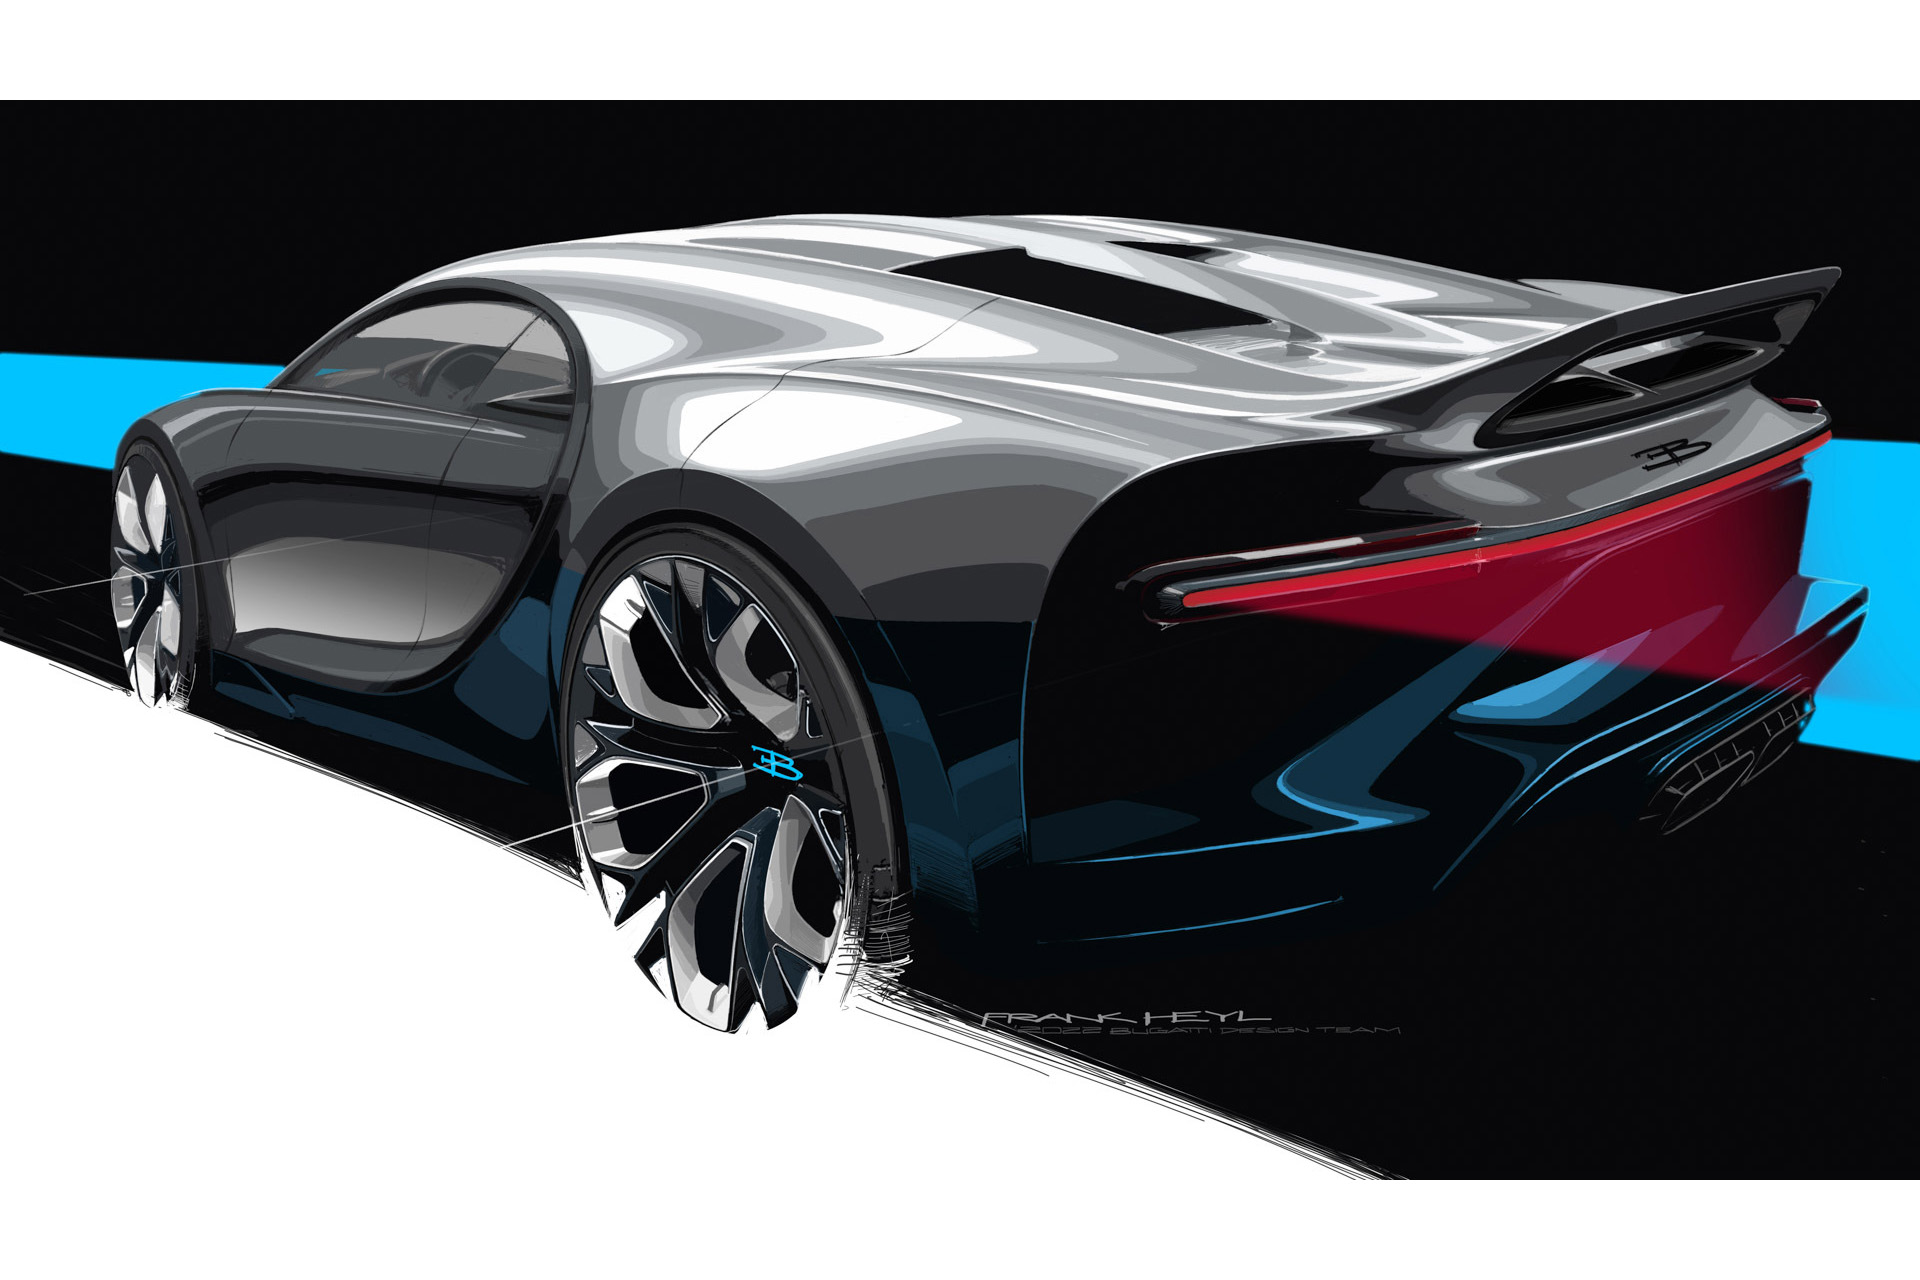 2022 Bugatti Chiron Profilée Design Sketch Wallpapers #54 of 54